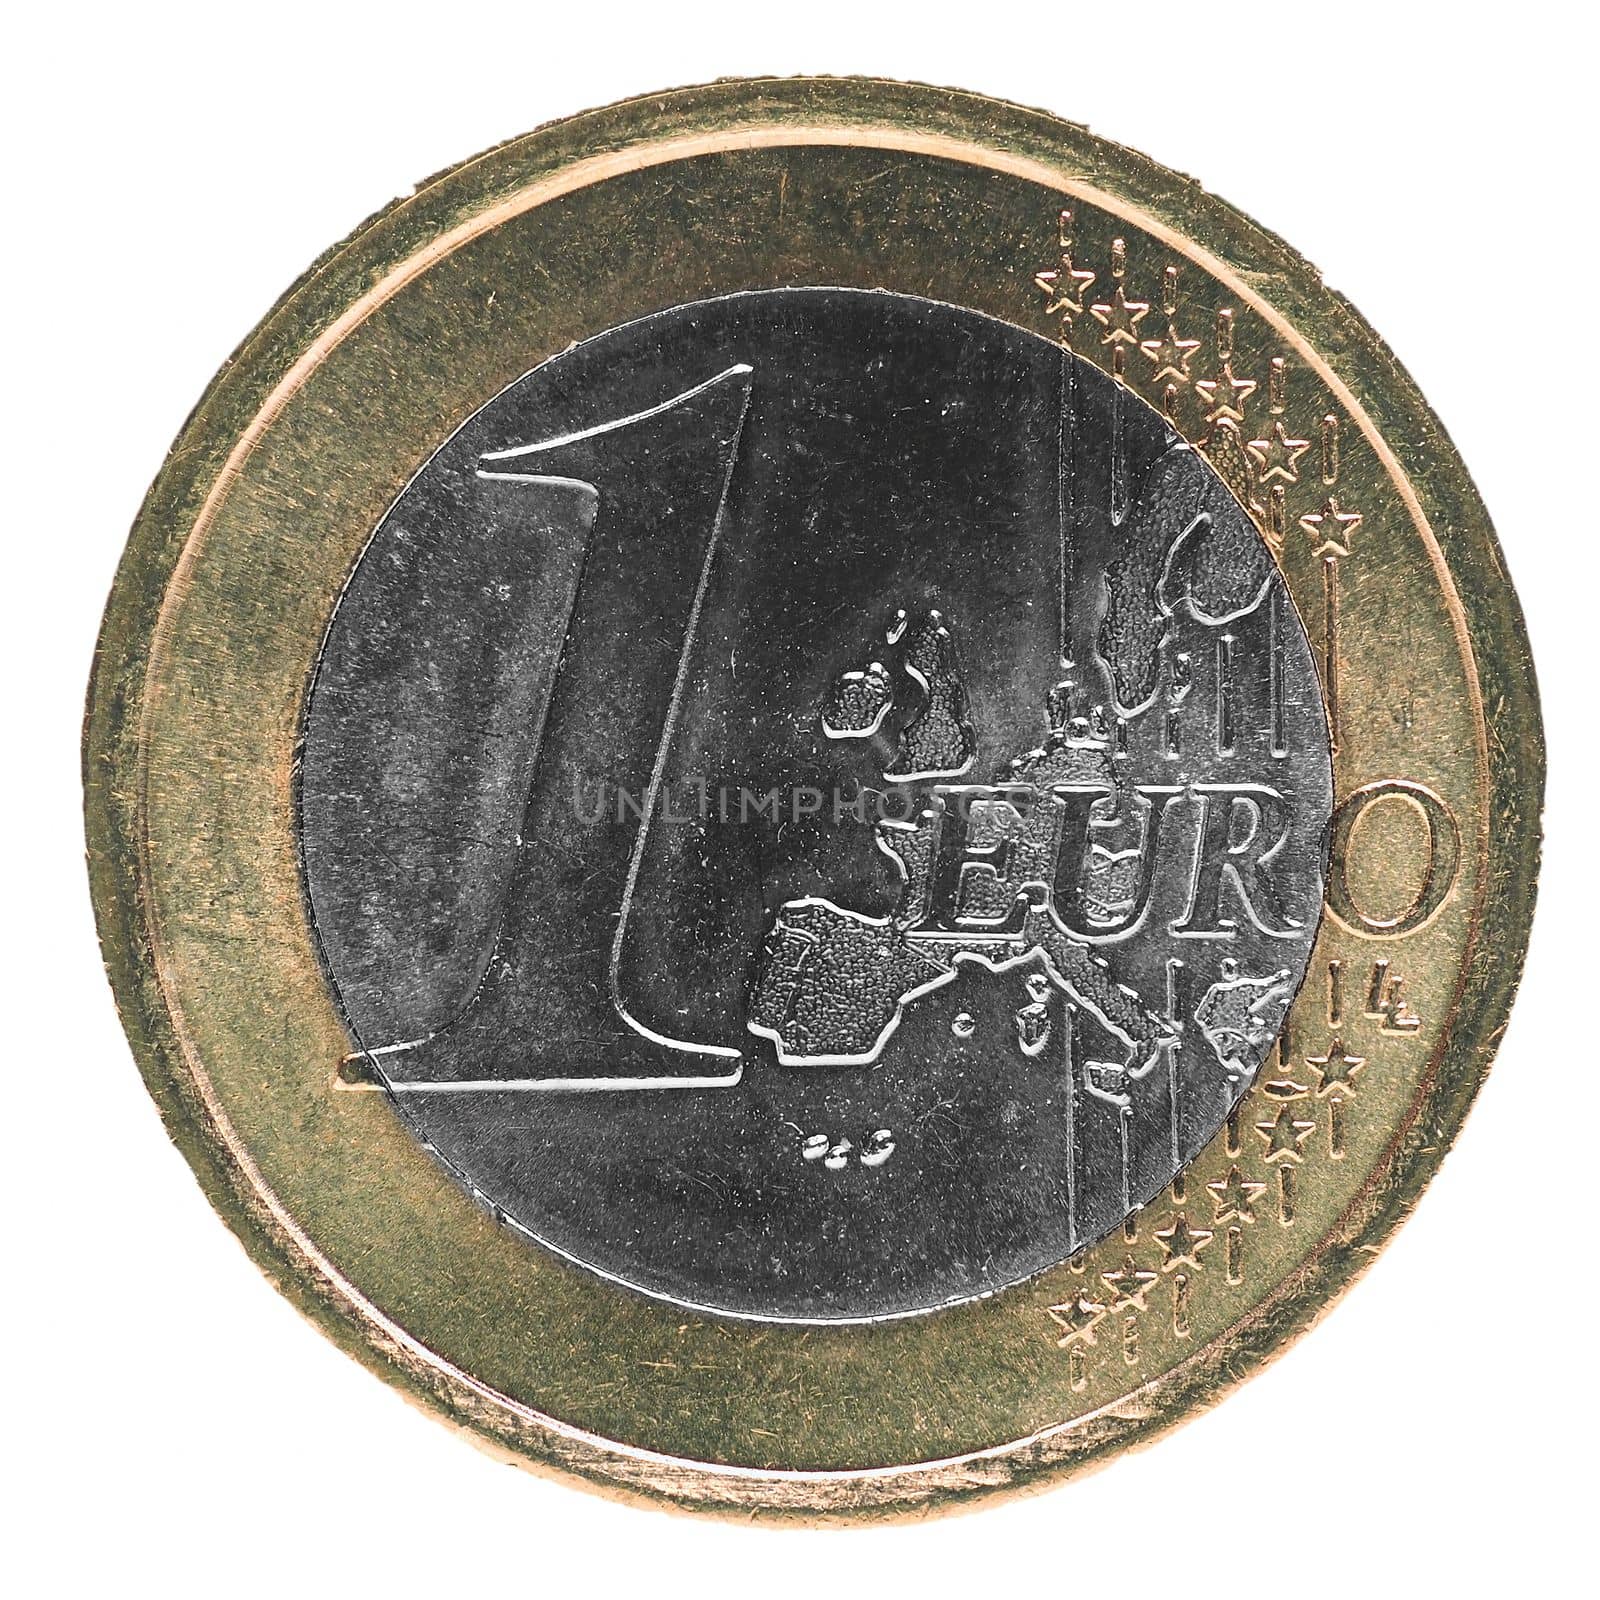 1 euro coin, European Union by claudiodivizia